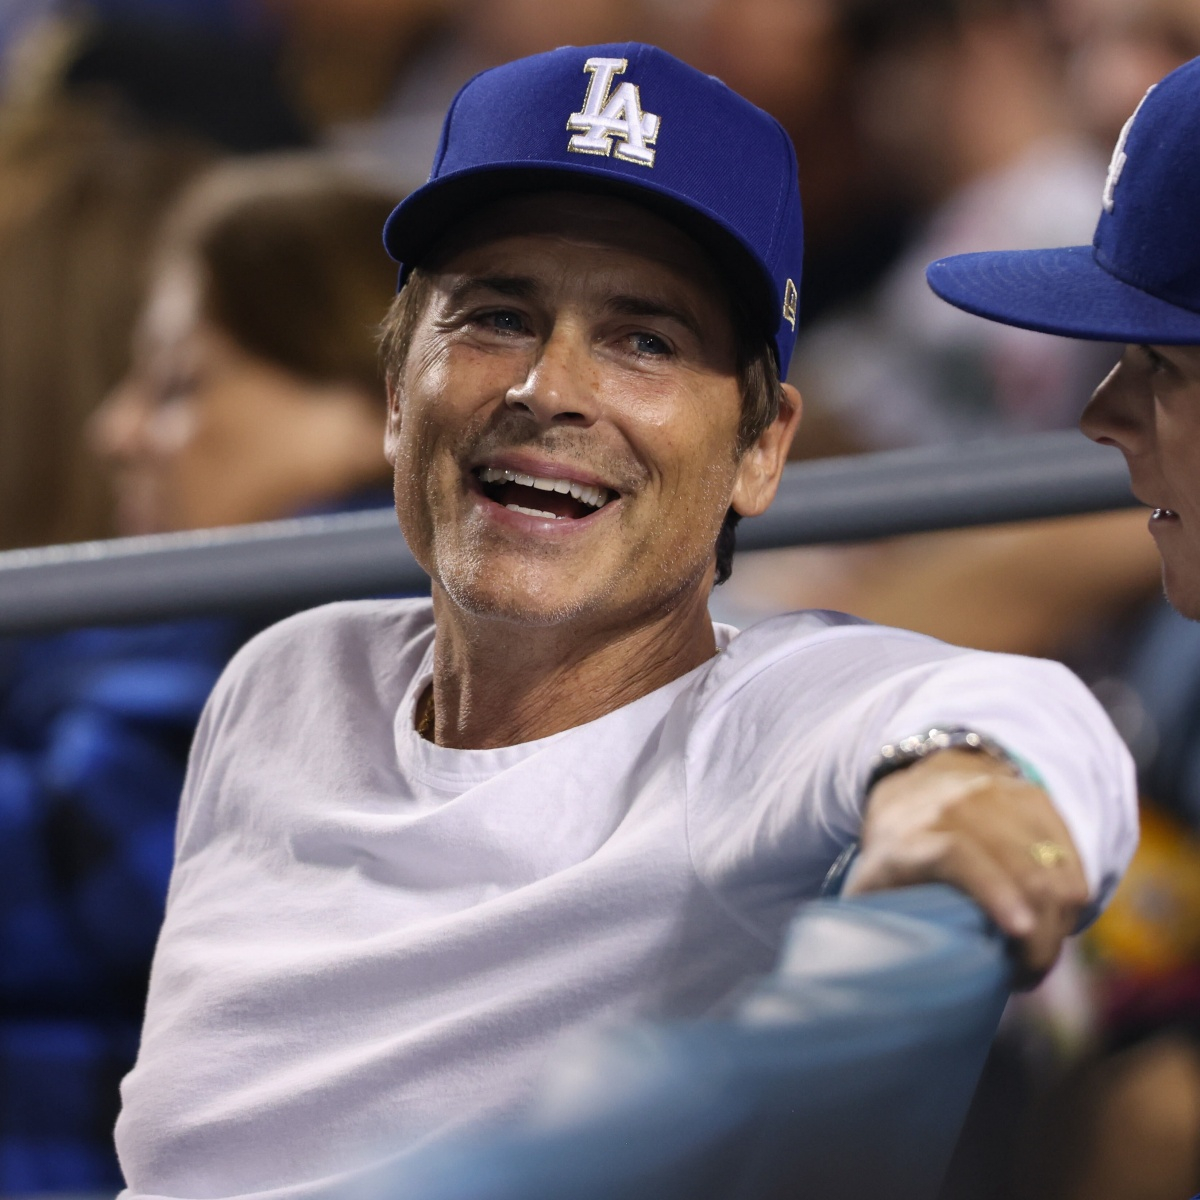 Cubs vs. Dodgers: Who's got the best celebrity fans?